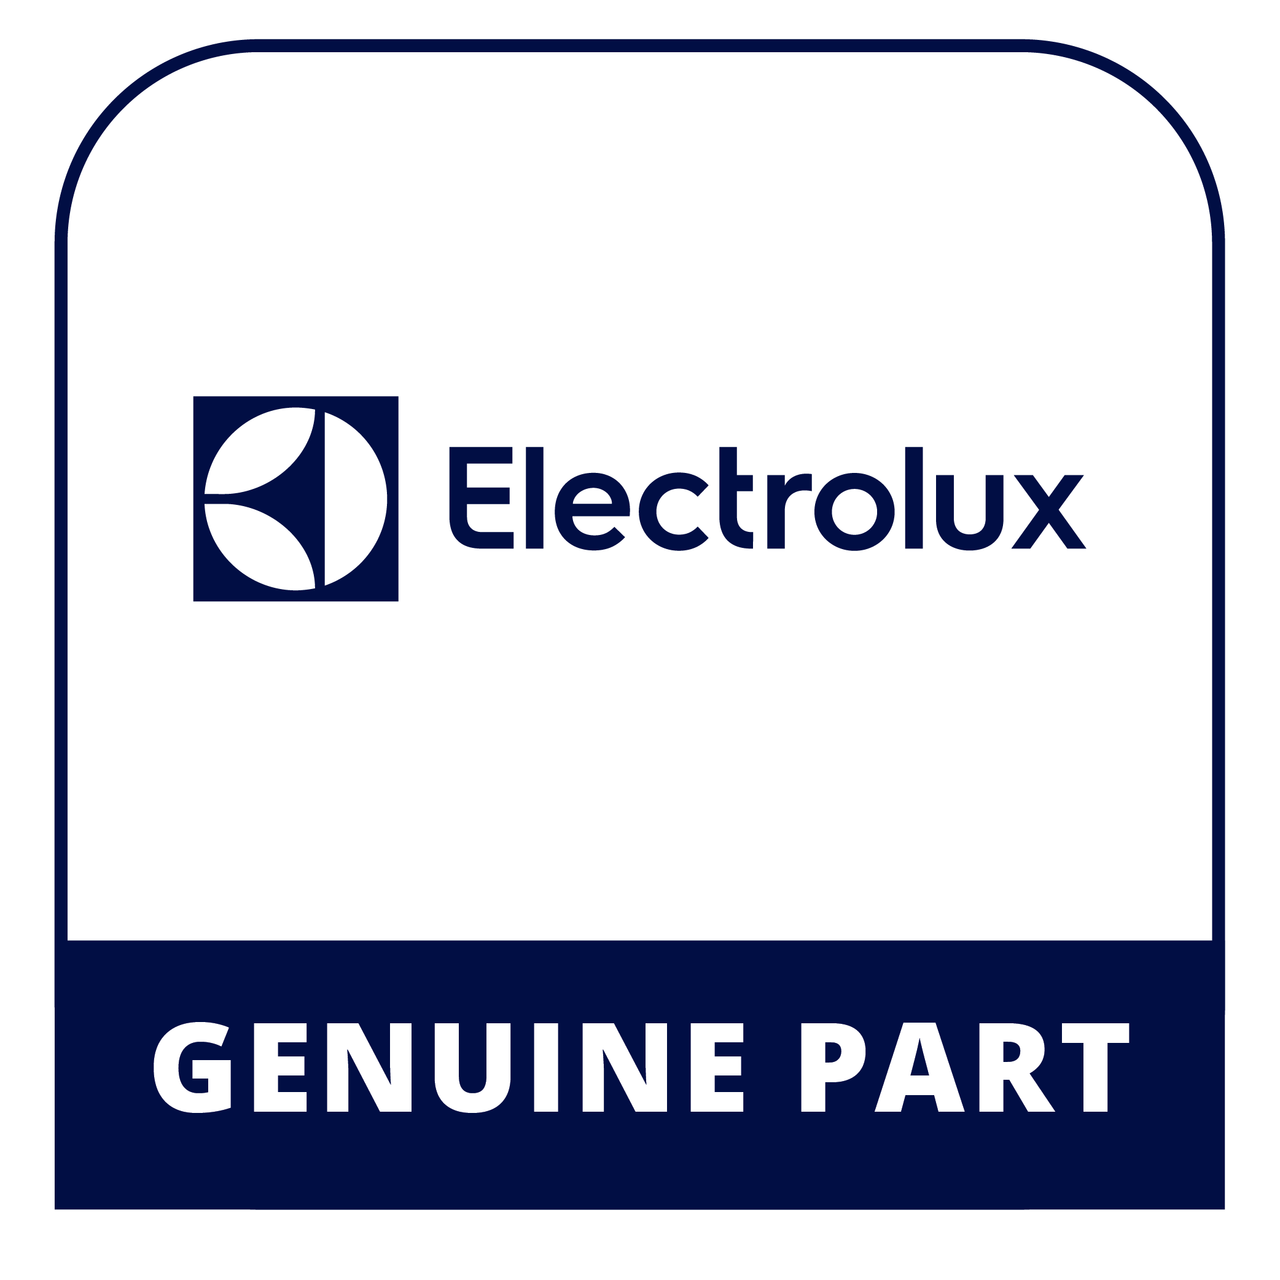 Frigidaire - Electrolux 242116001 - Block-Handle Mtg - Genuine Electrolux Part